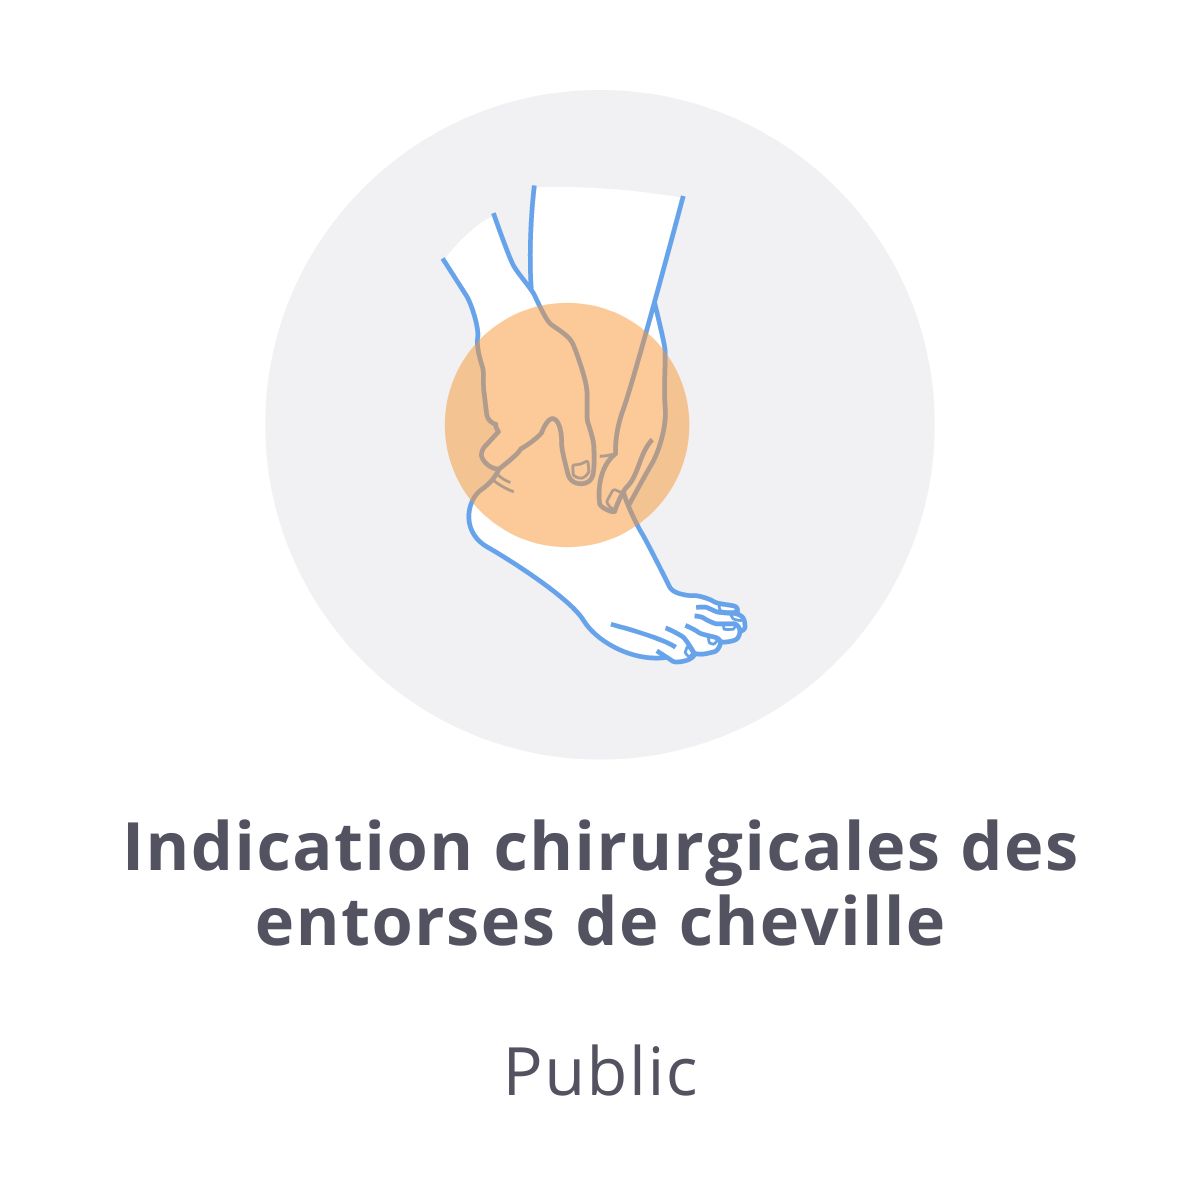 You are currently viewing Indication chirurgicales des entorses de cheville, quoi de neuf en 2022 ? 